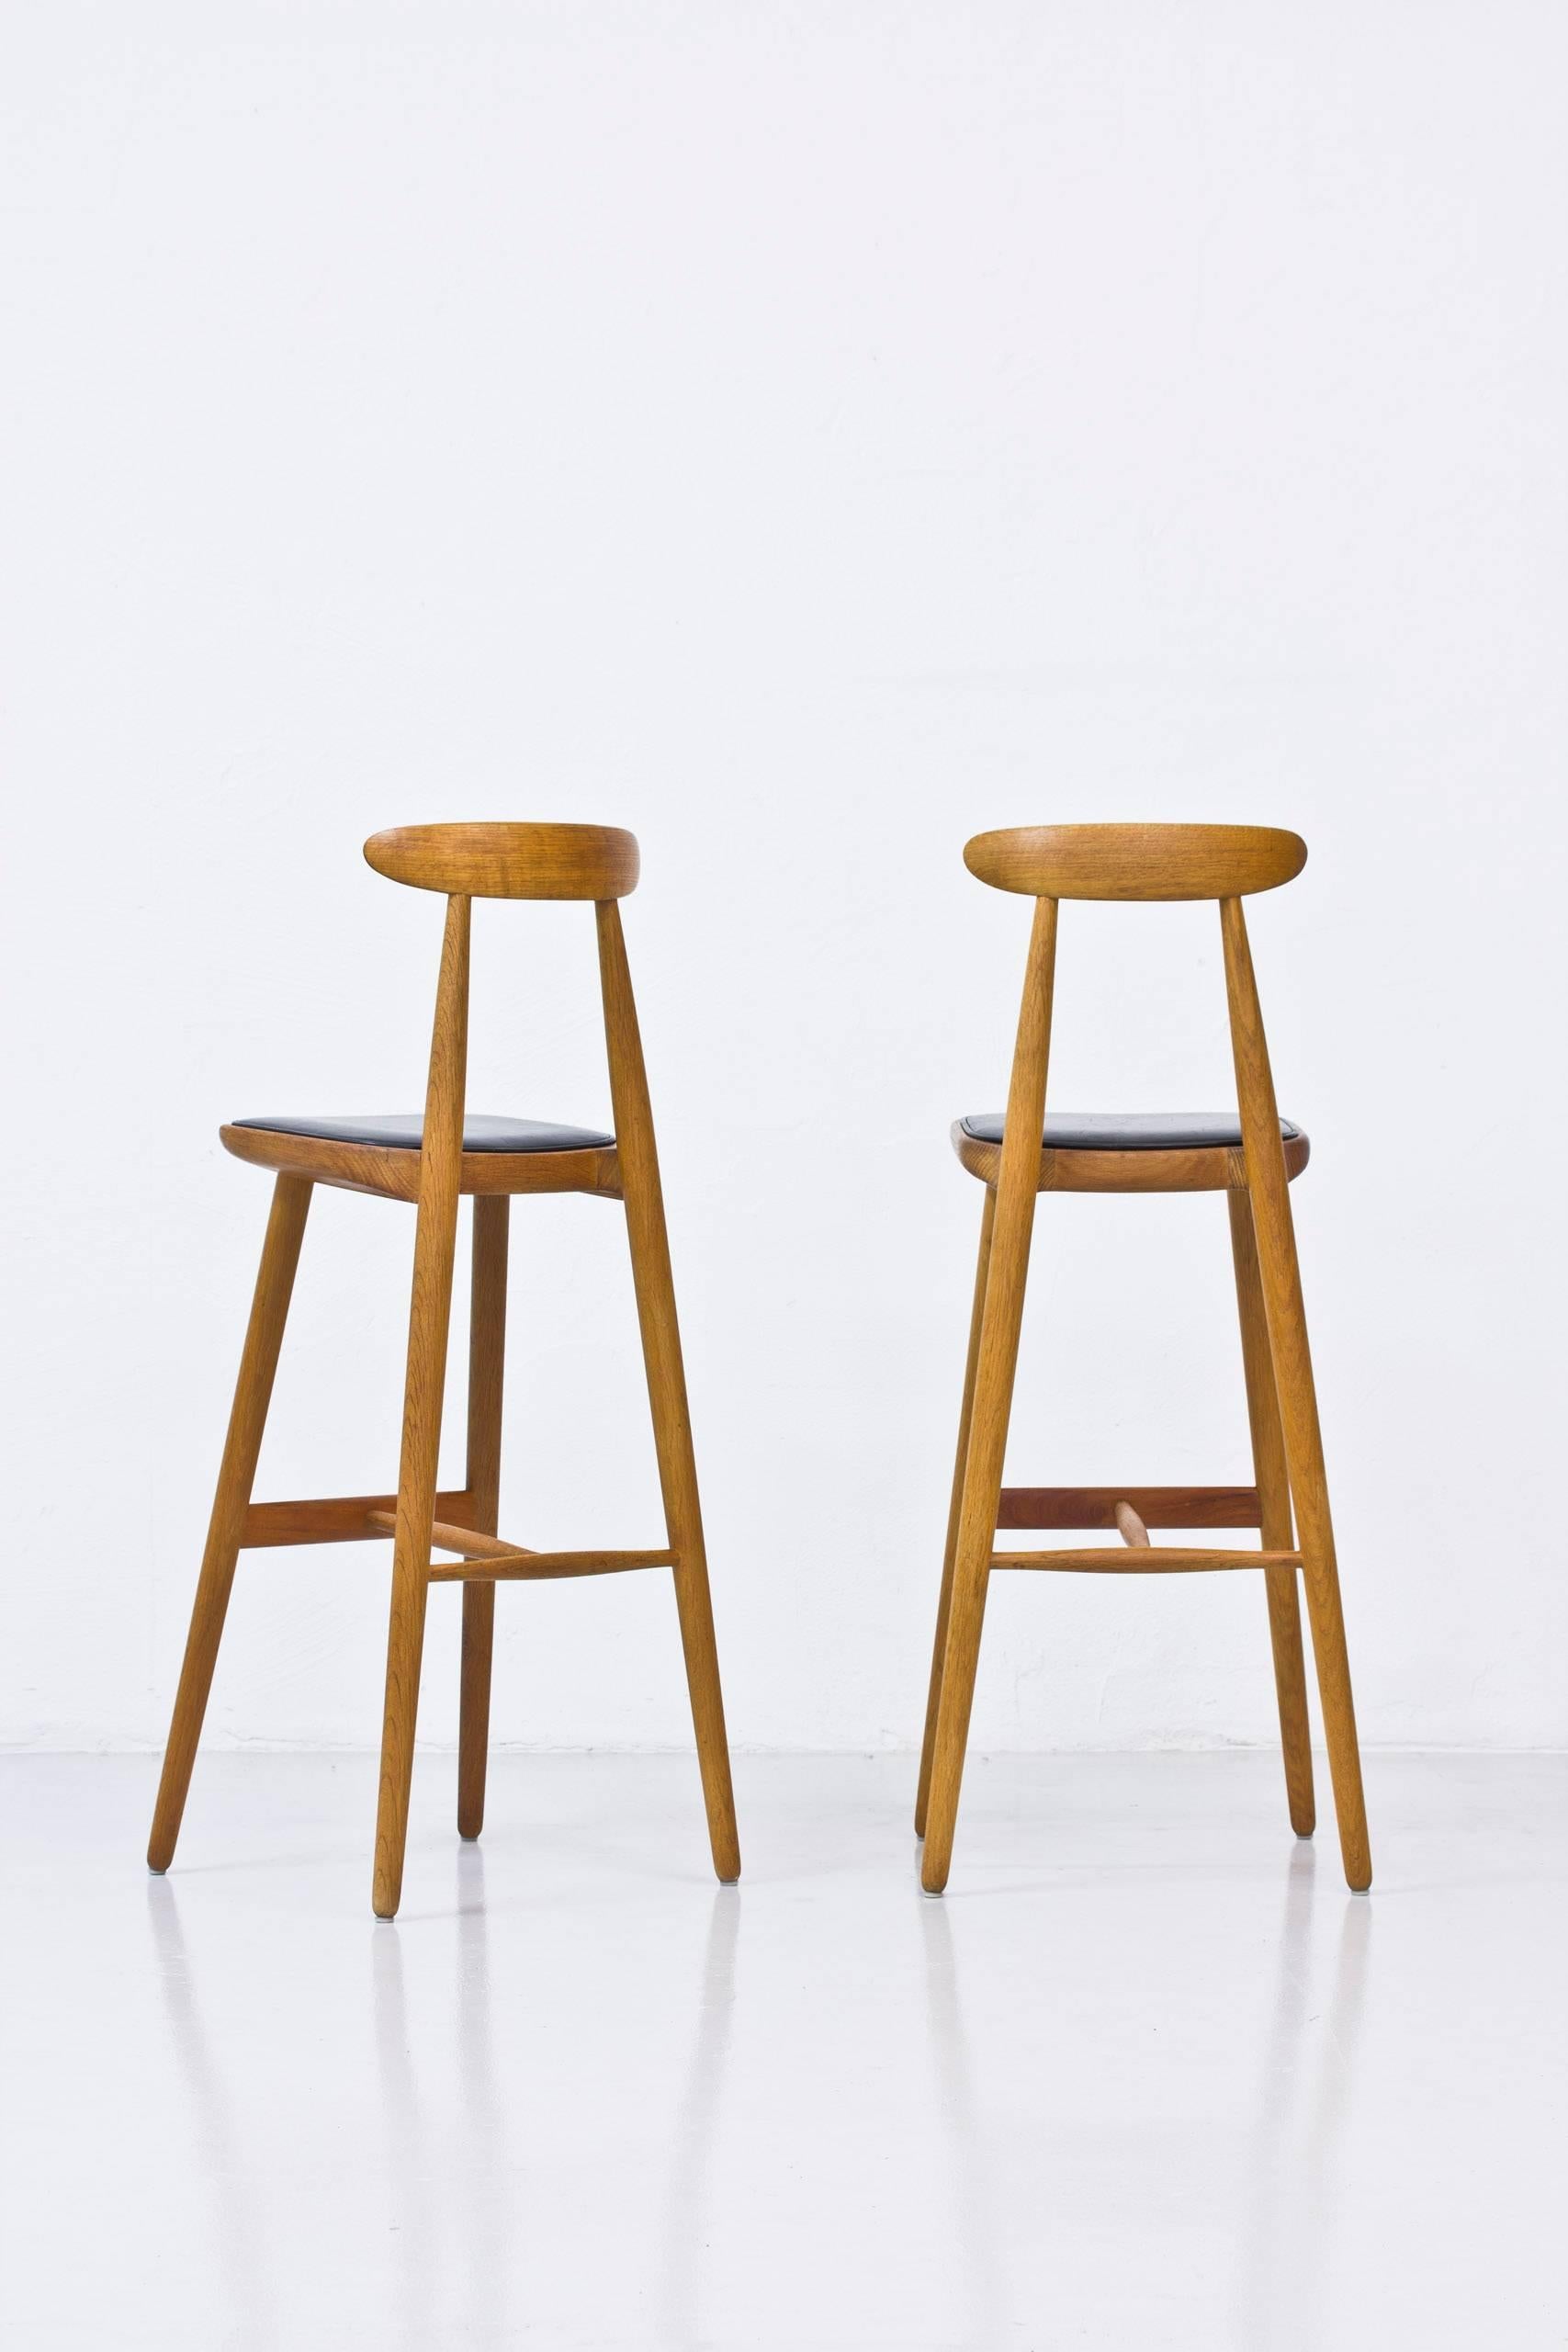 1950's bar stools